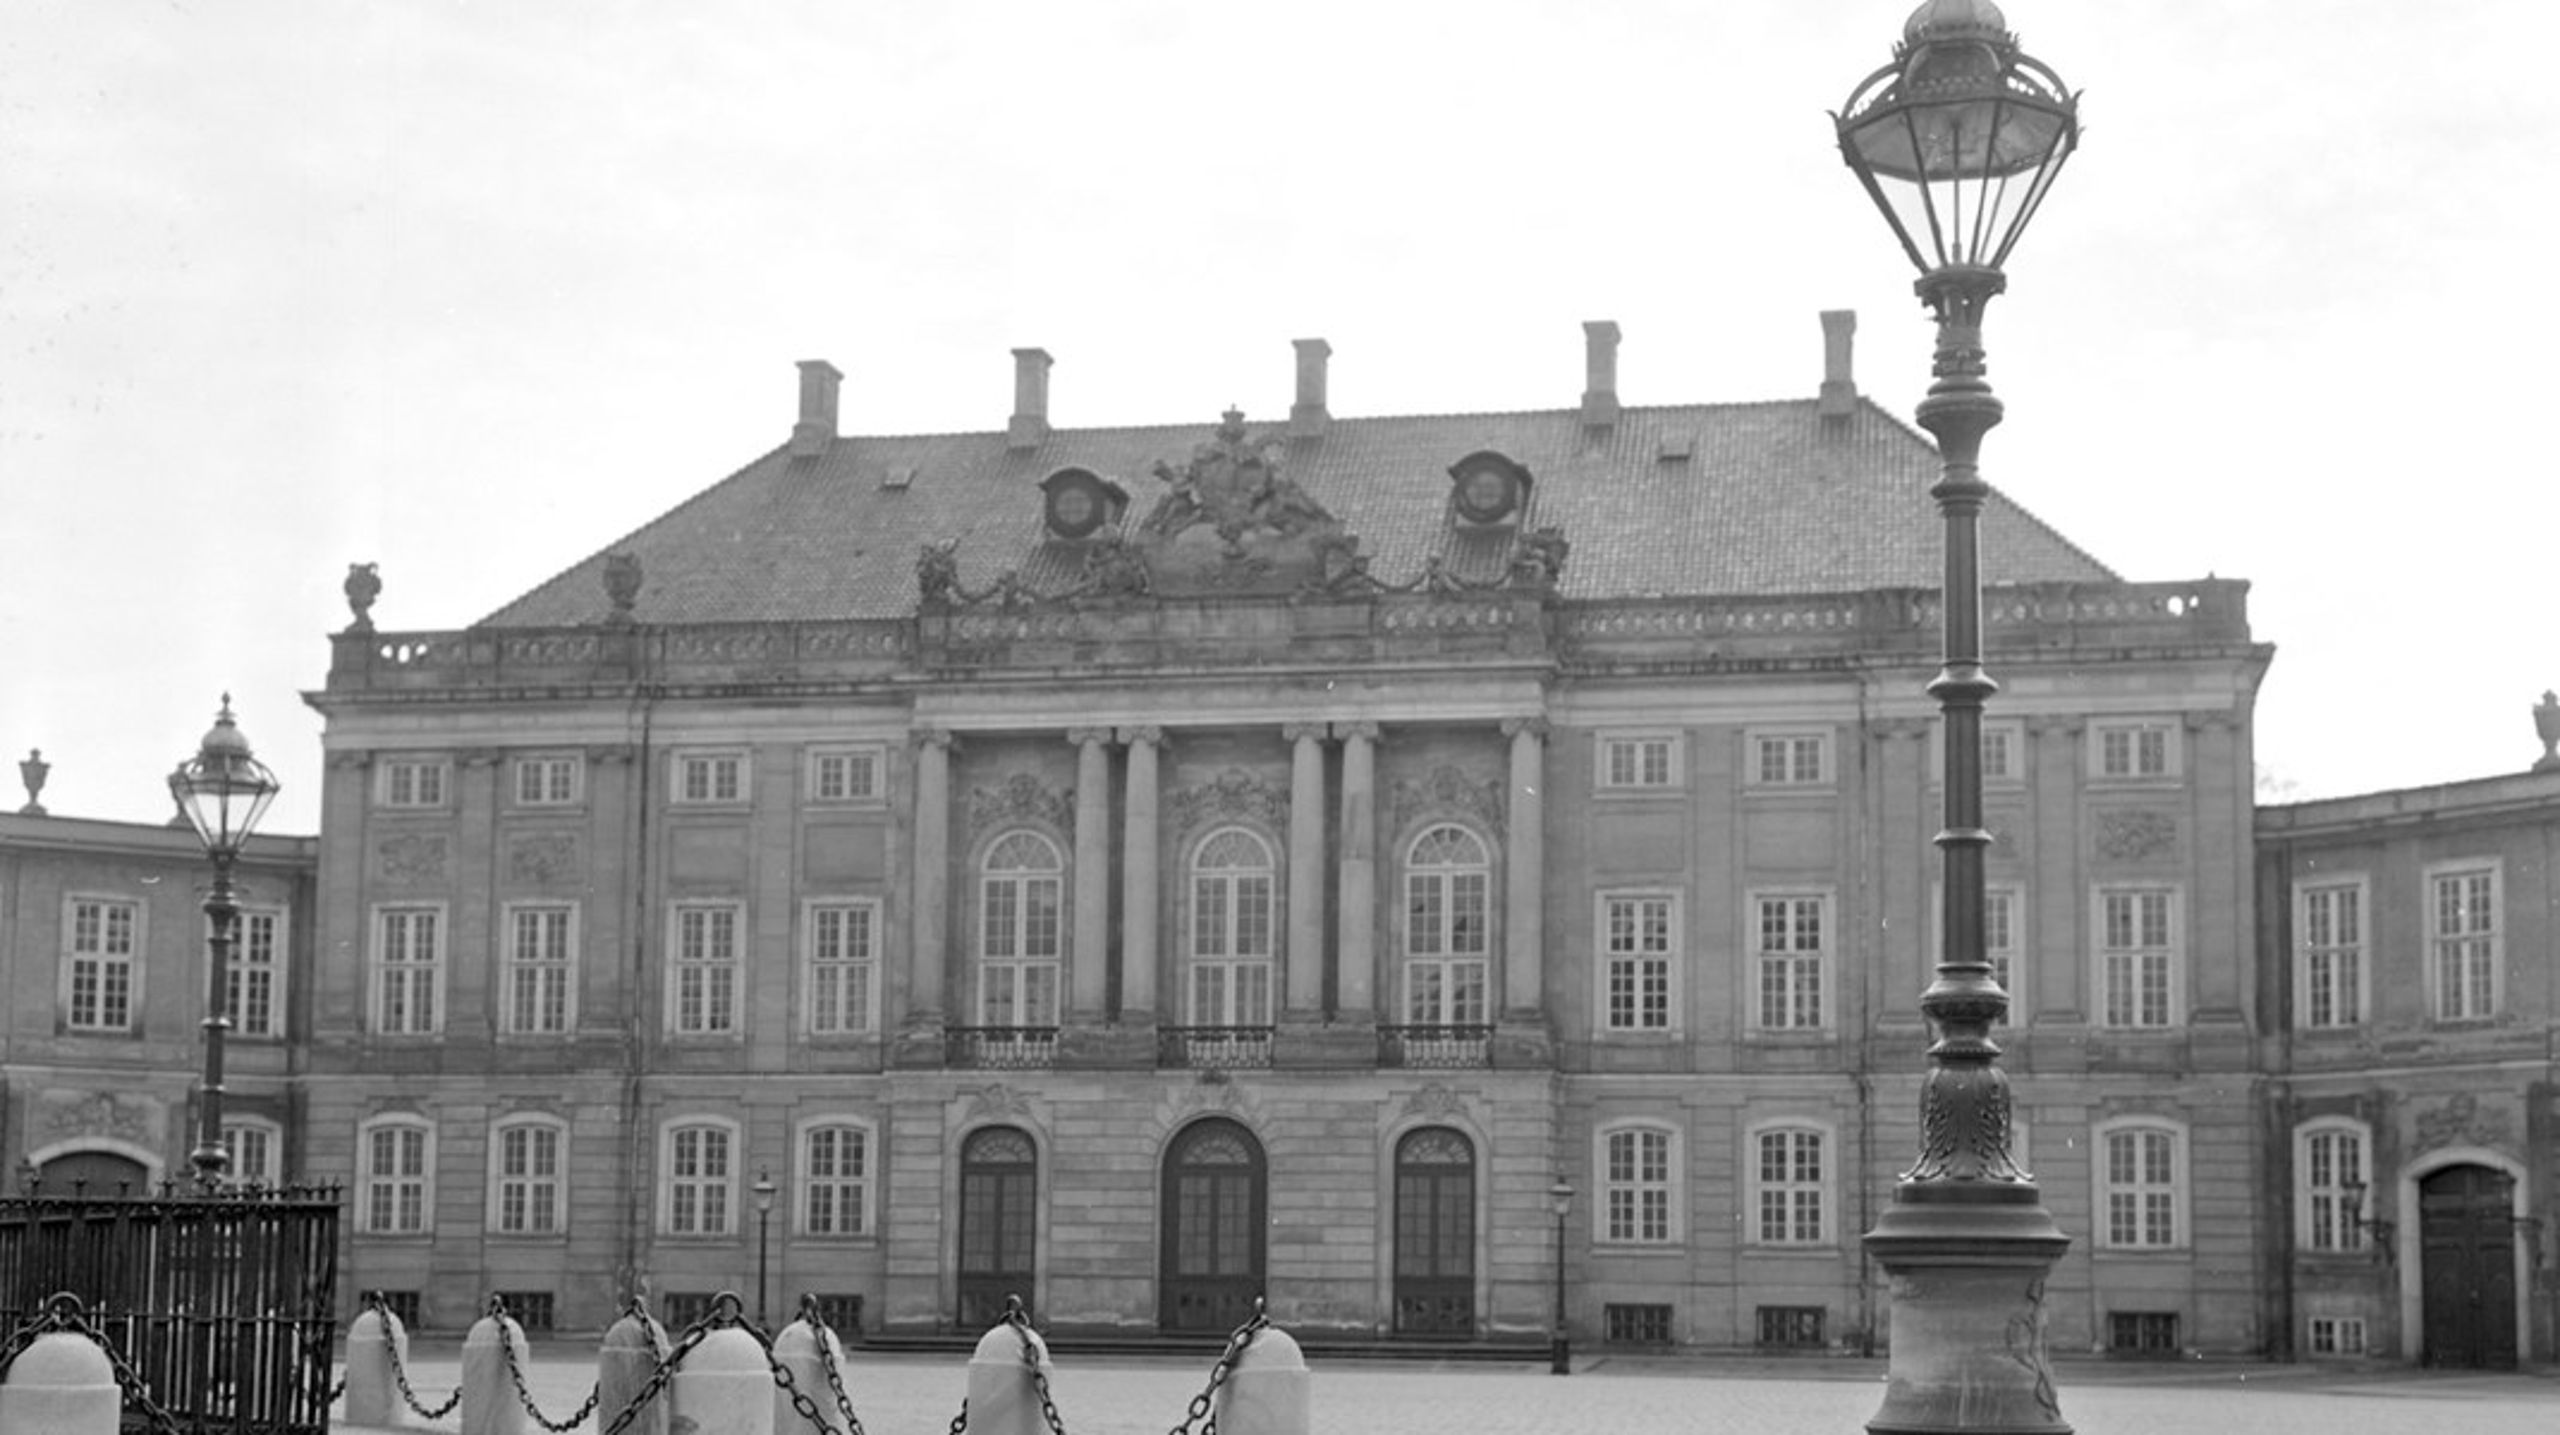 Den første rigsretssag i danmarkshistorien blev ført på Amalienborg. Kongefamilien boede dengang på Christiansborg.